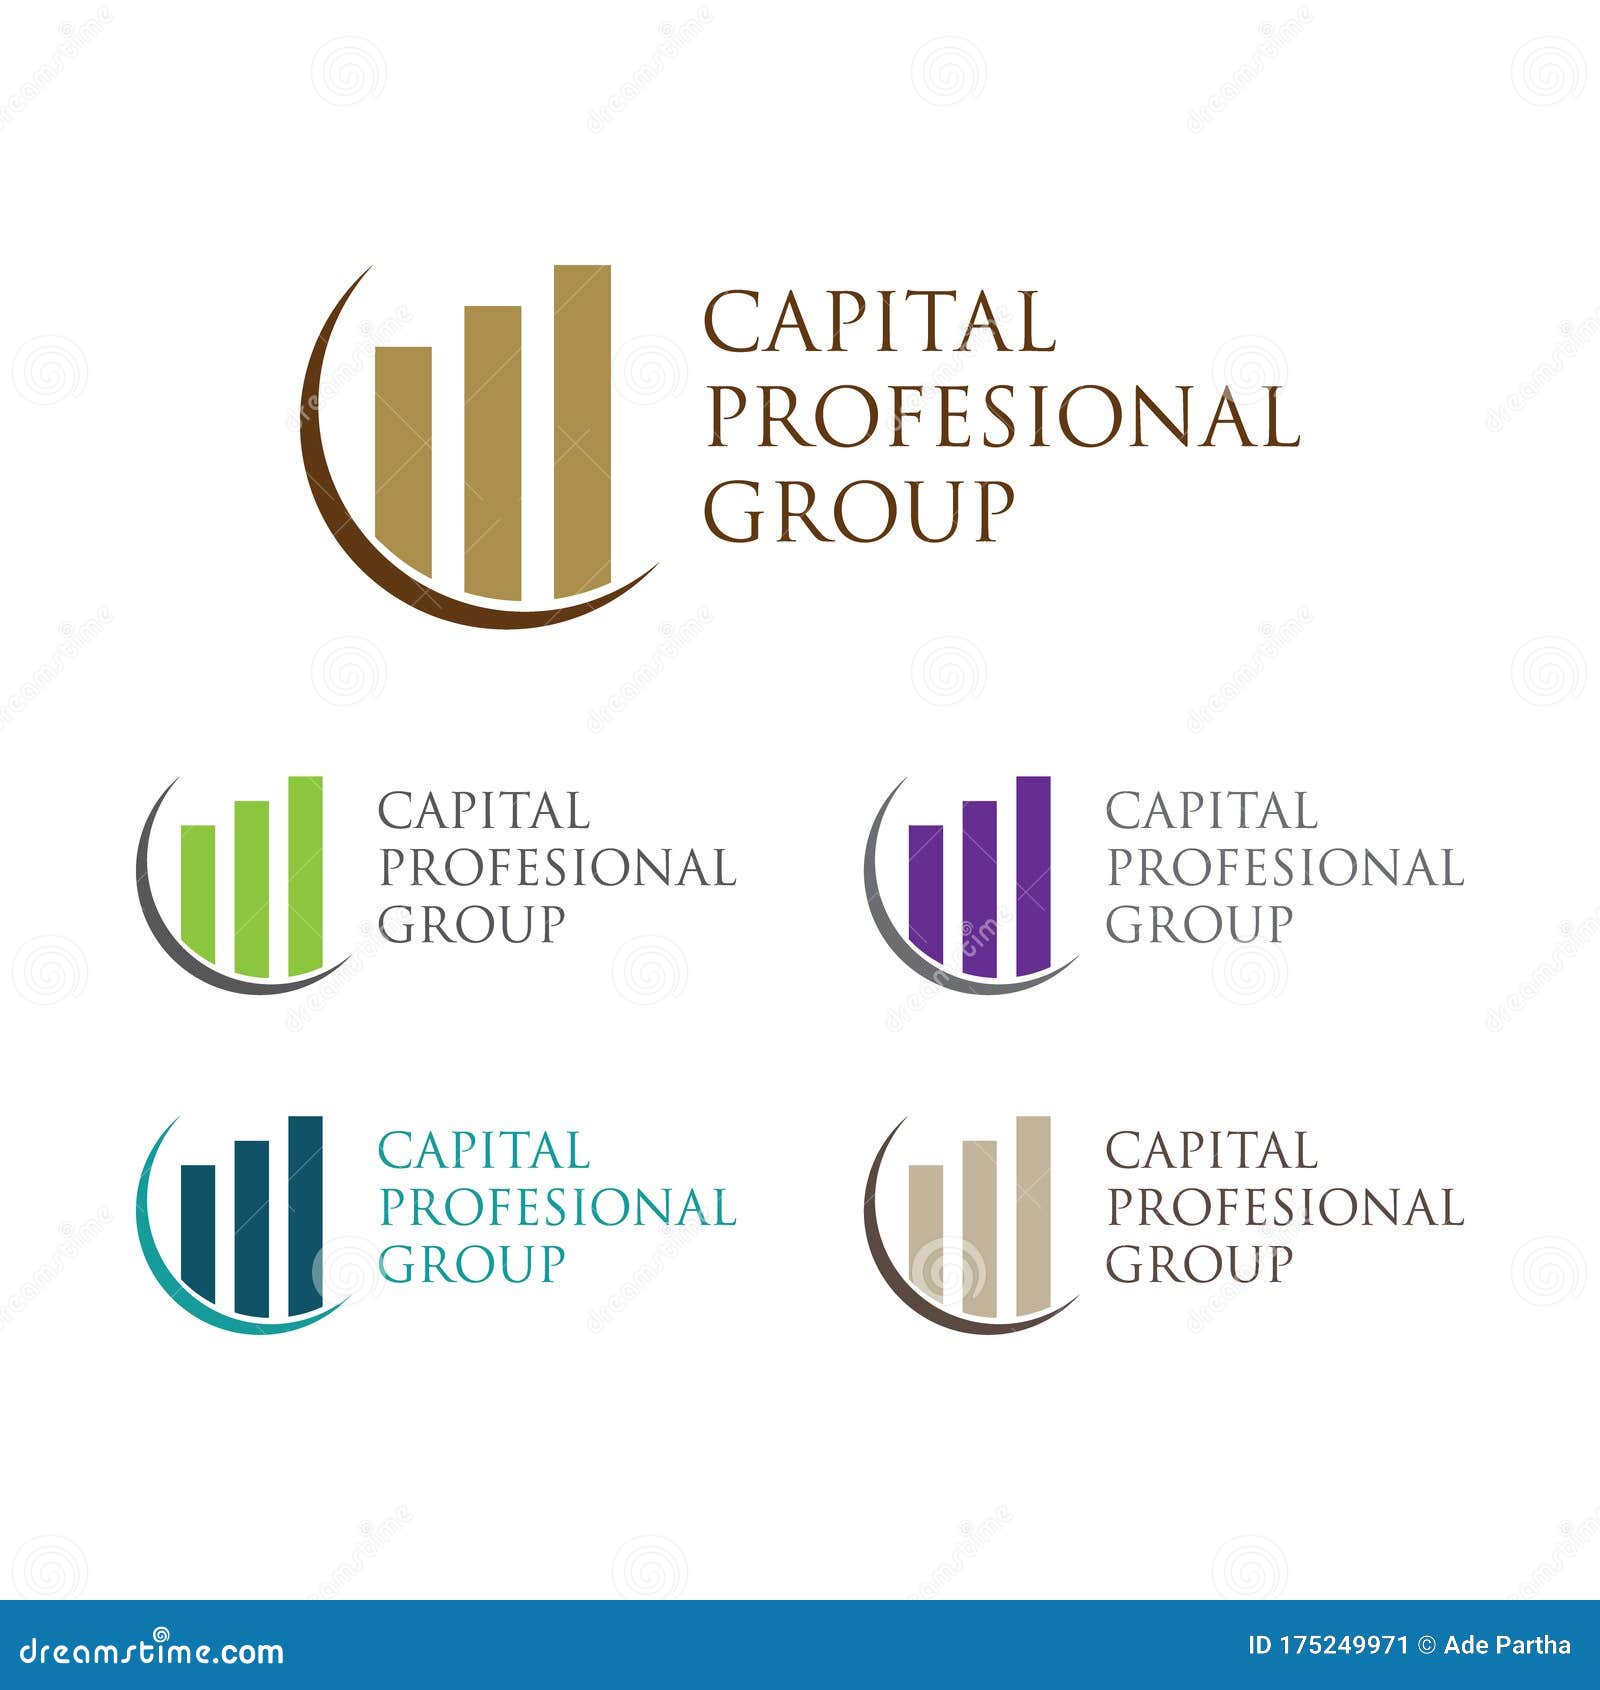 capital profesional group logo 